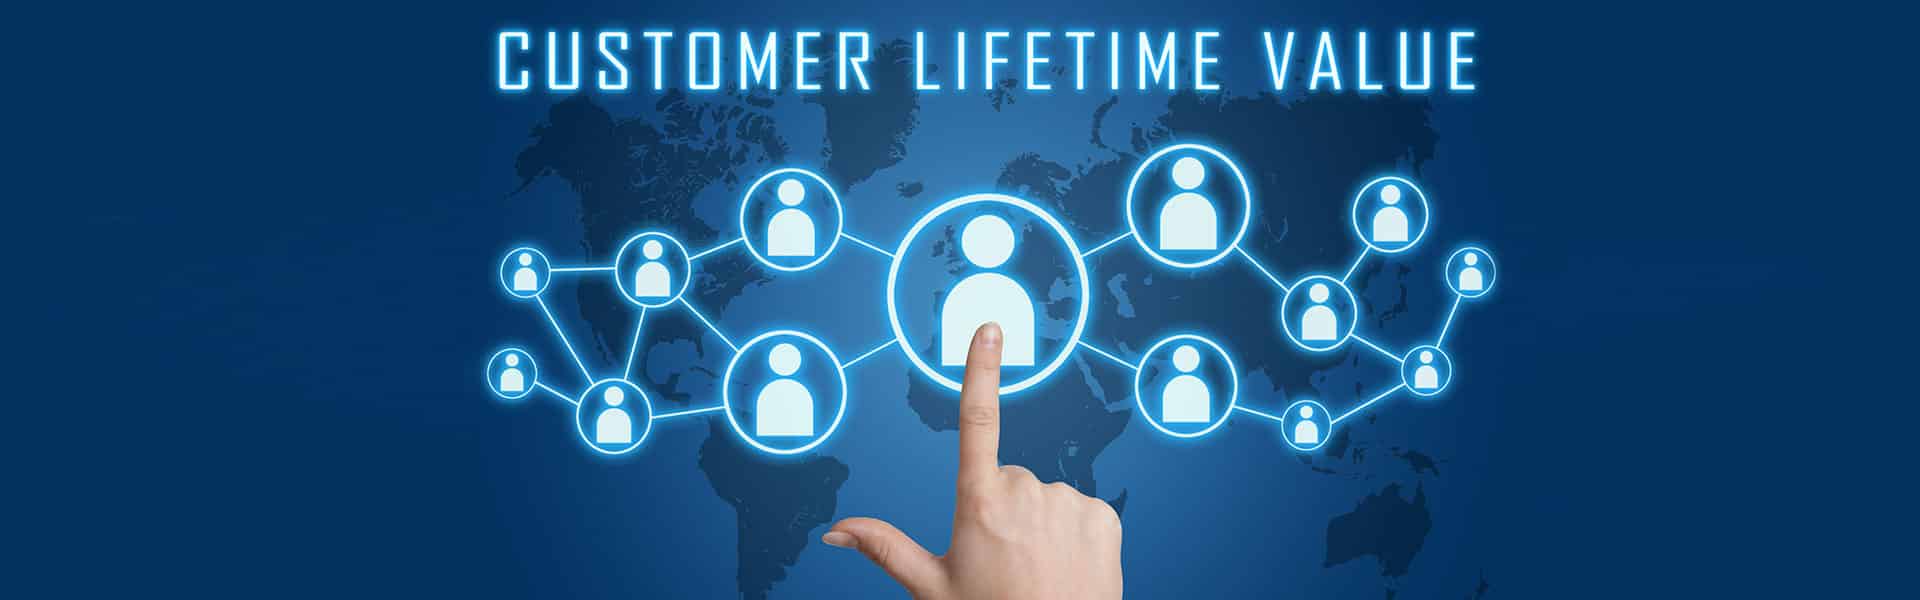 Customer Lifetime Value - Die Stars